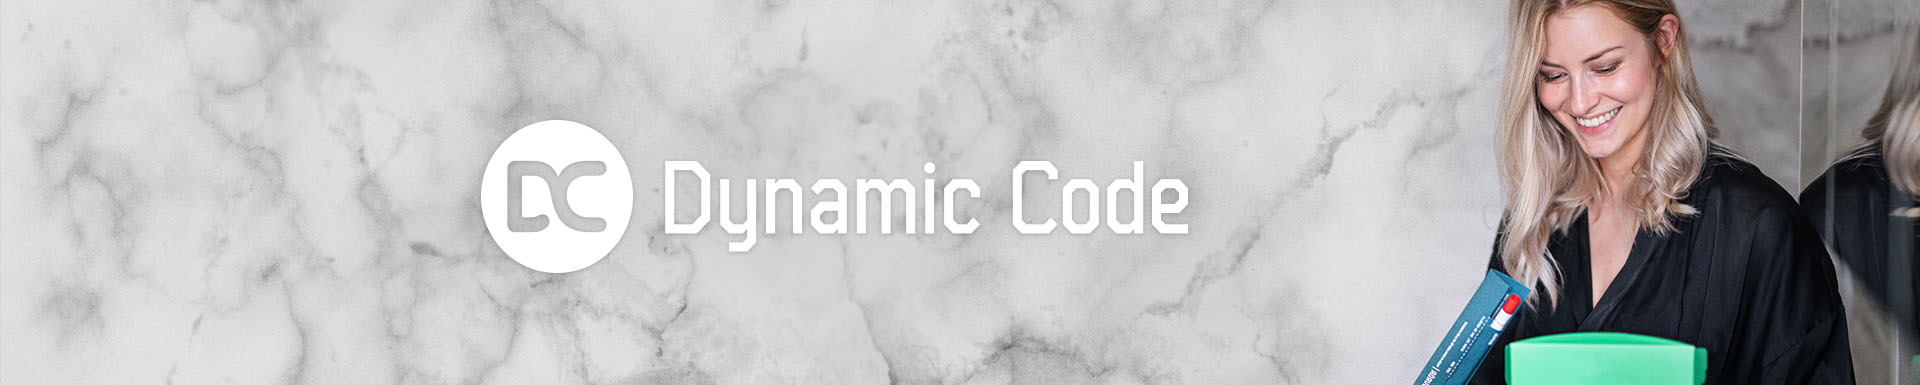 Dynamic Code tilbyr smarte testløsninger til hjemmetesting.